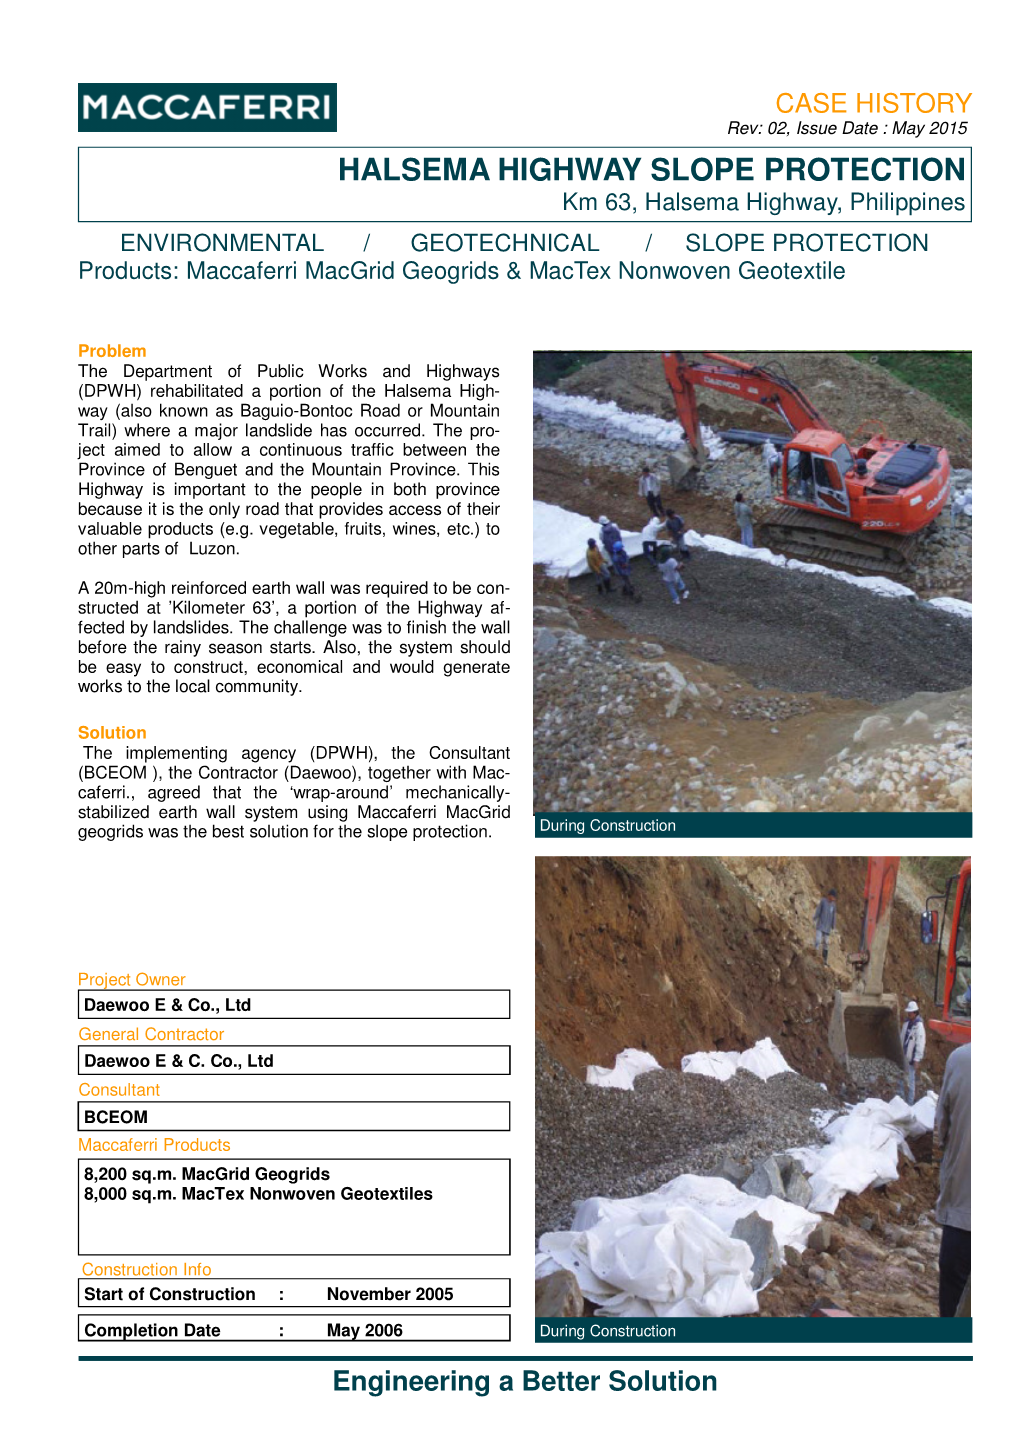 CH-RWSR-PH-Halsema Highway Slope Protection with Macgrids,Rev02 May2015